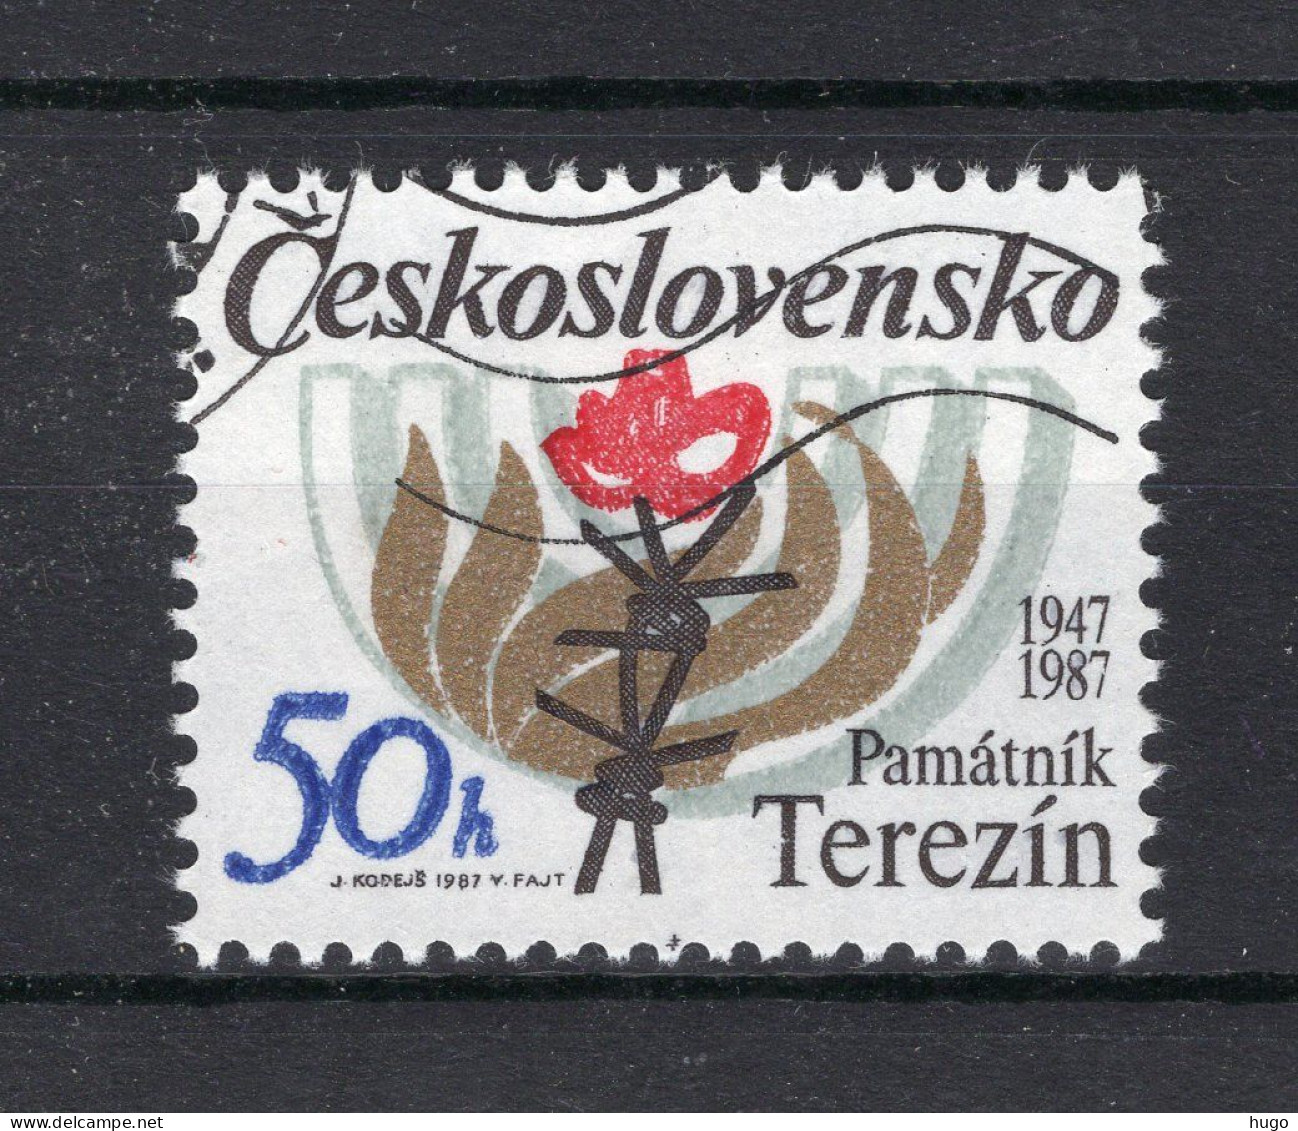 TSJECHOSLOVAKIJE Yt. 2736° Gestempeld 1987 - Used Stamps